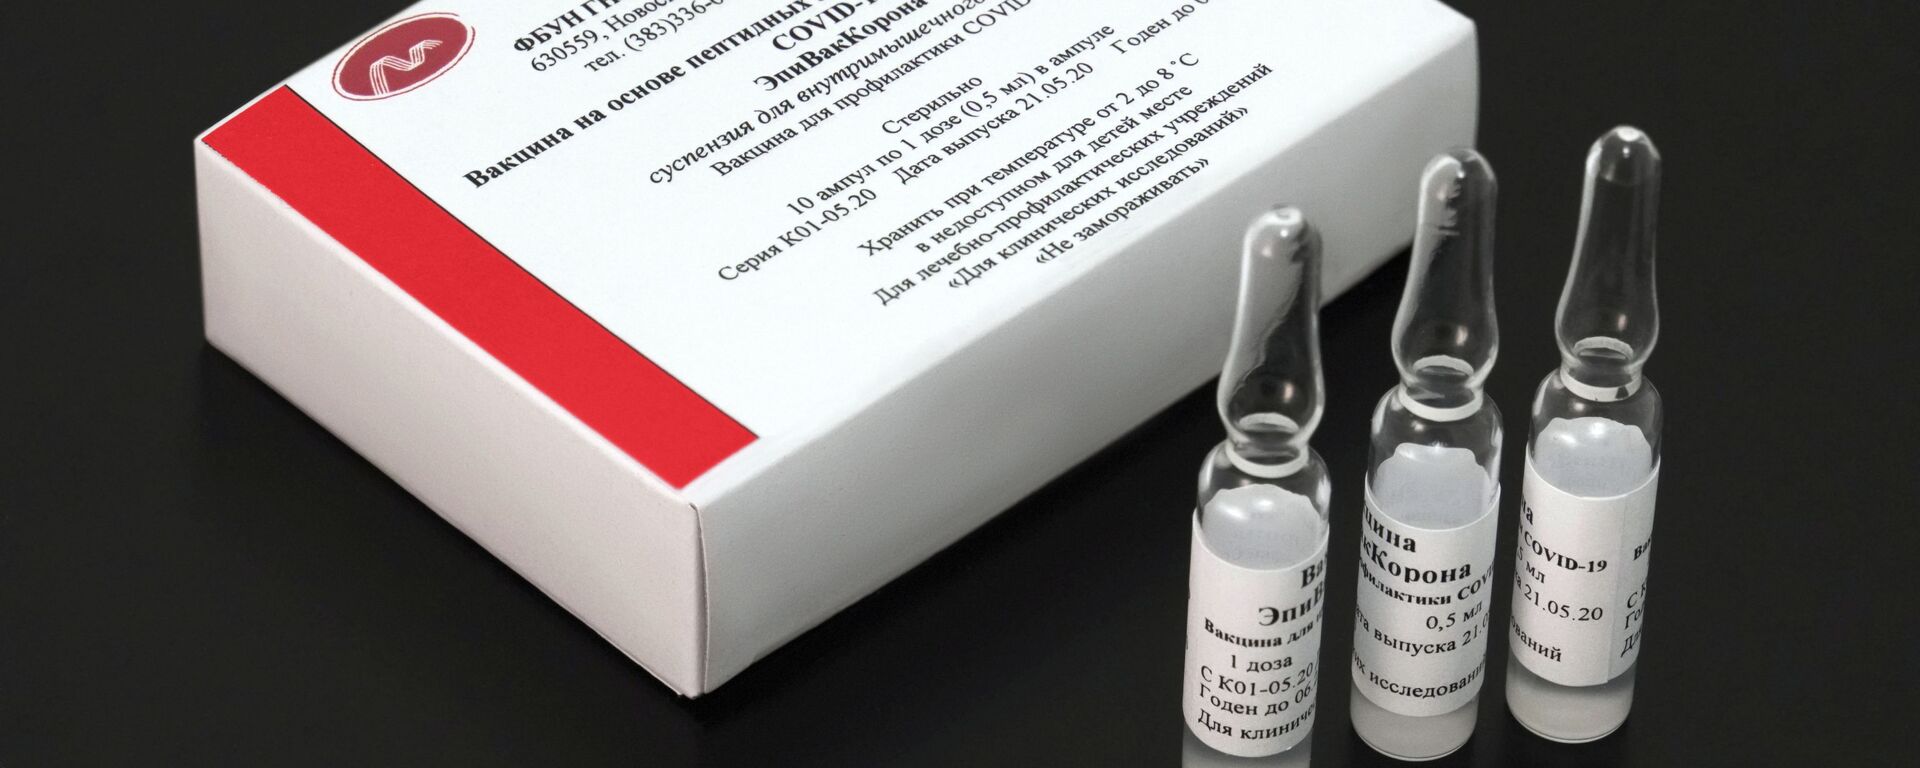 La vacuna anti-COVID-19 'EpiVacCorona' - Sputnik Mundo, 1920, 30.03.2021